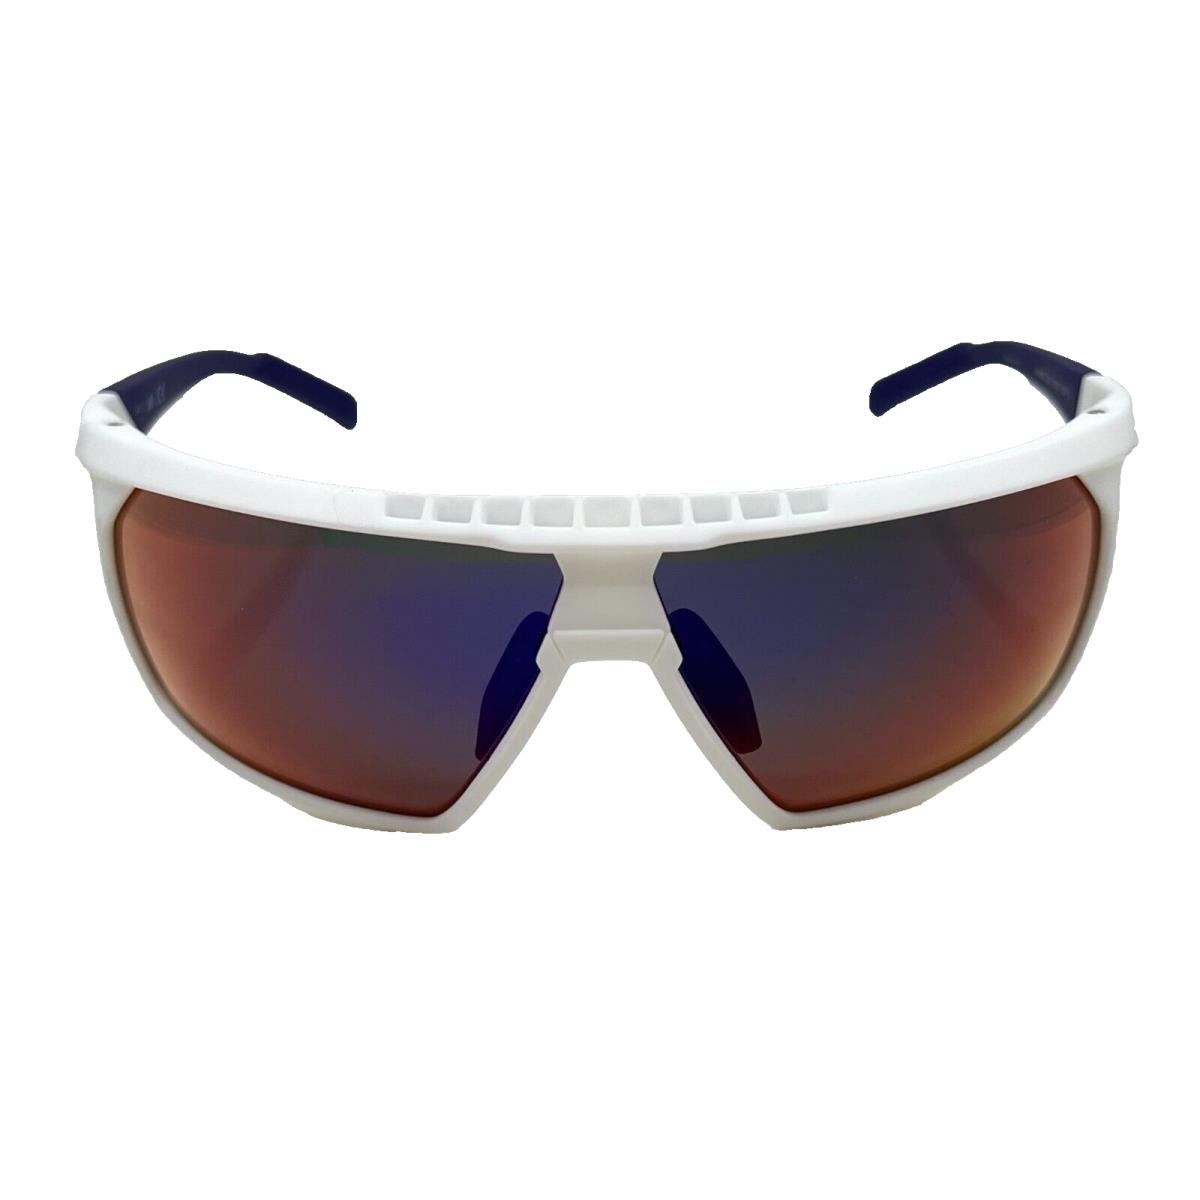 Adidas Sport - SP0030 21Z 70/9/135 - White - Sunglasses Case